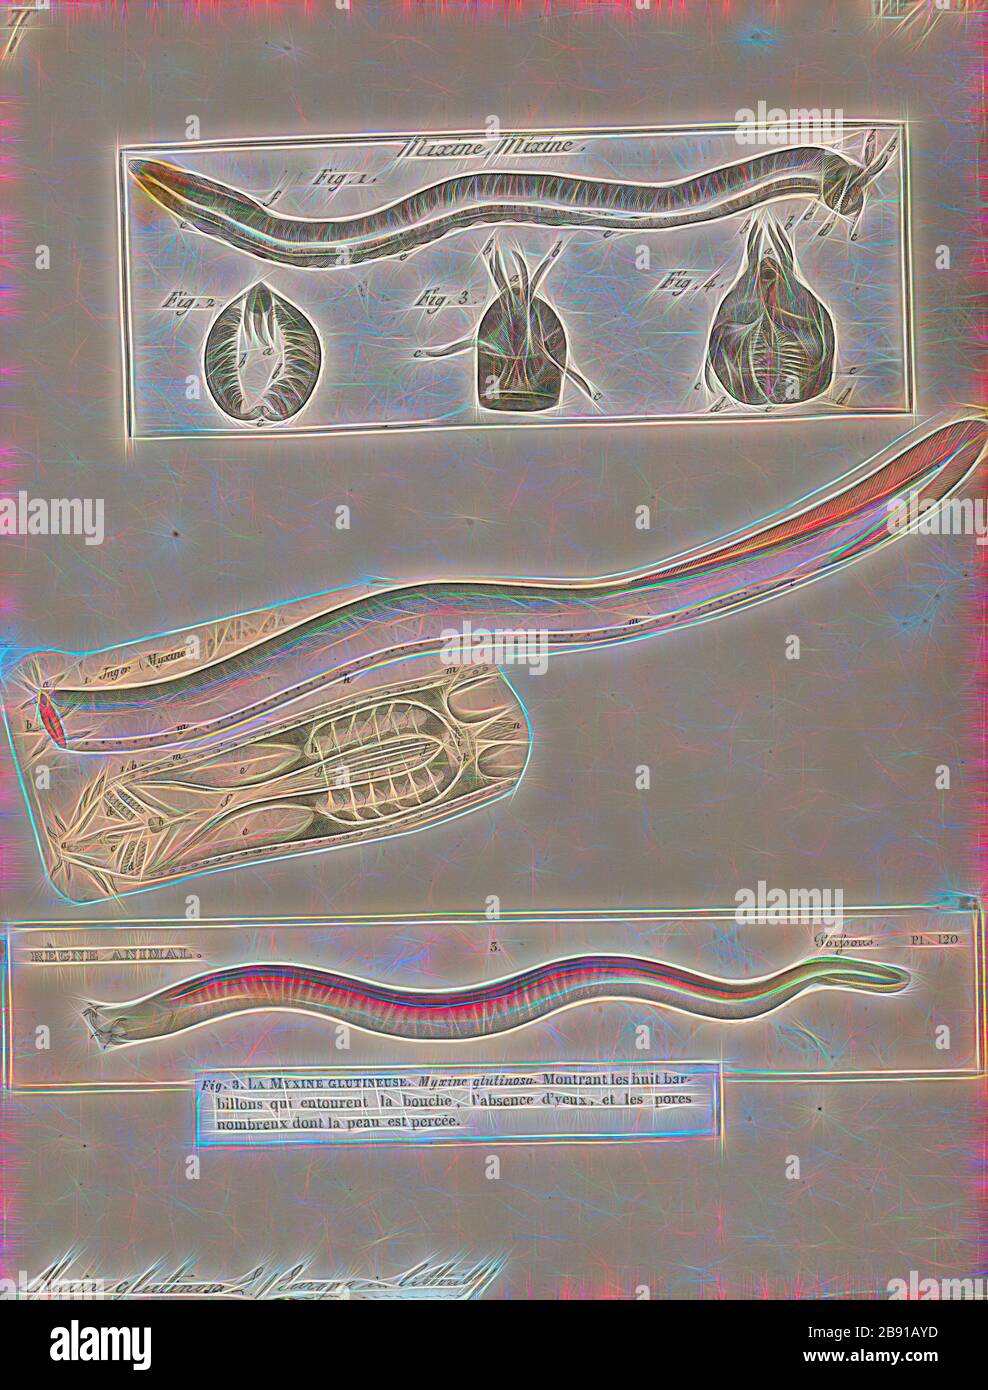 Hagfish Anatomy